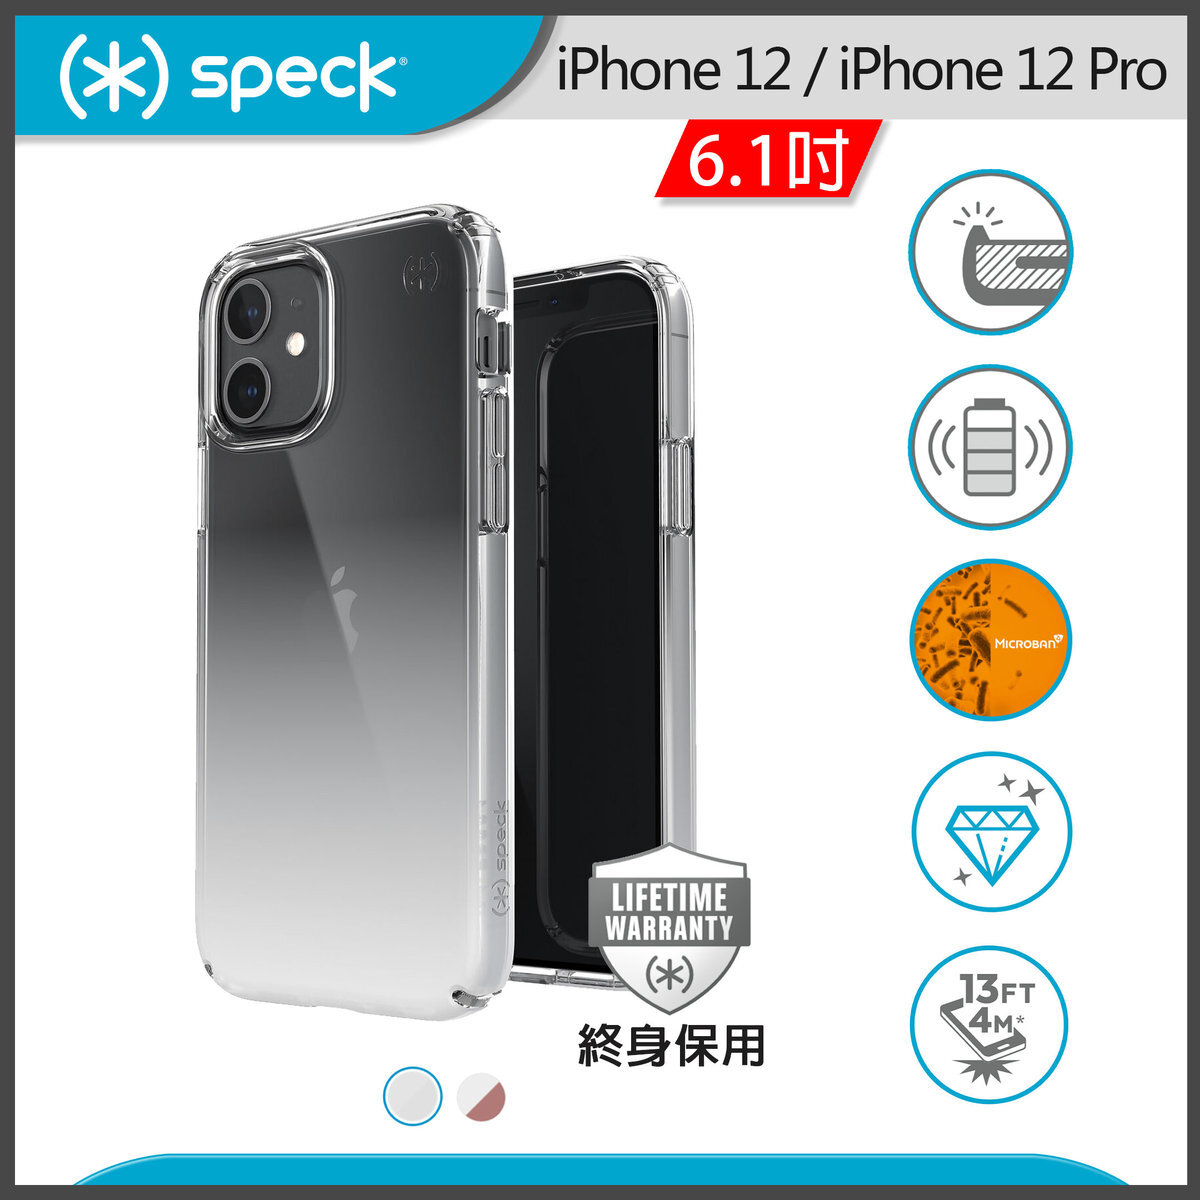 Speck Apple Iphone 13 Pro Presidio Perfect Clear Ombre Case